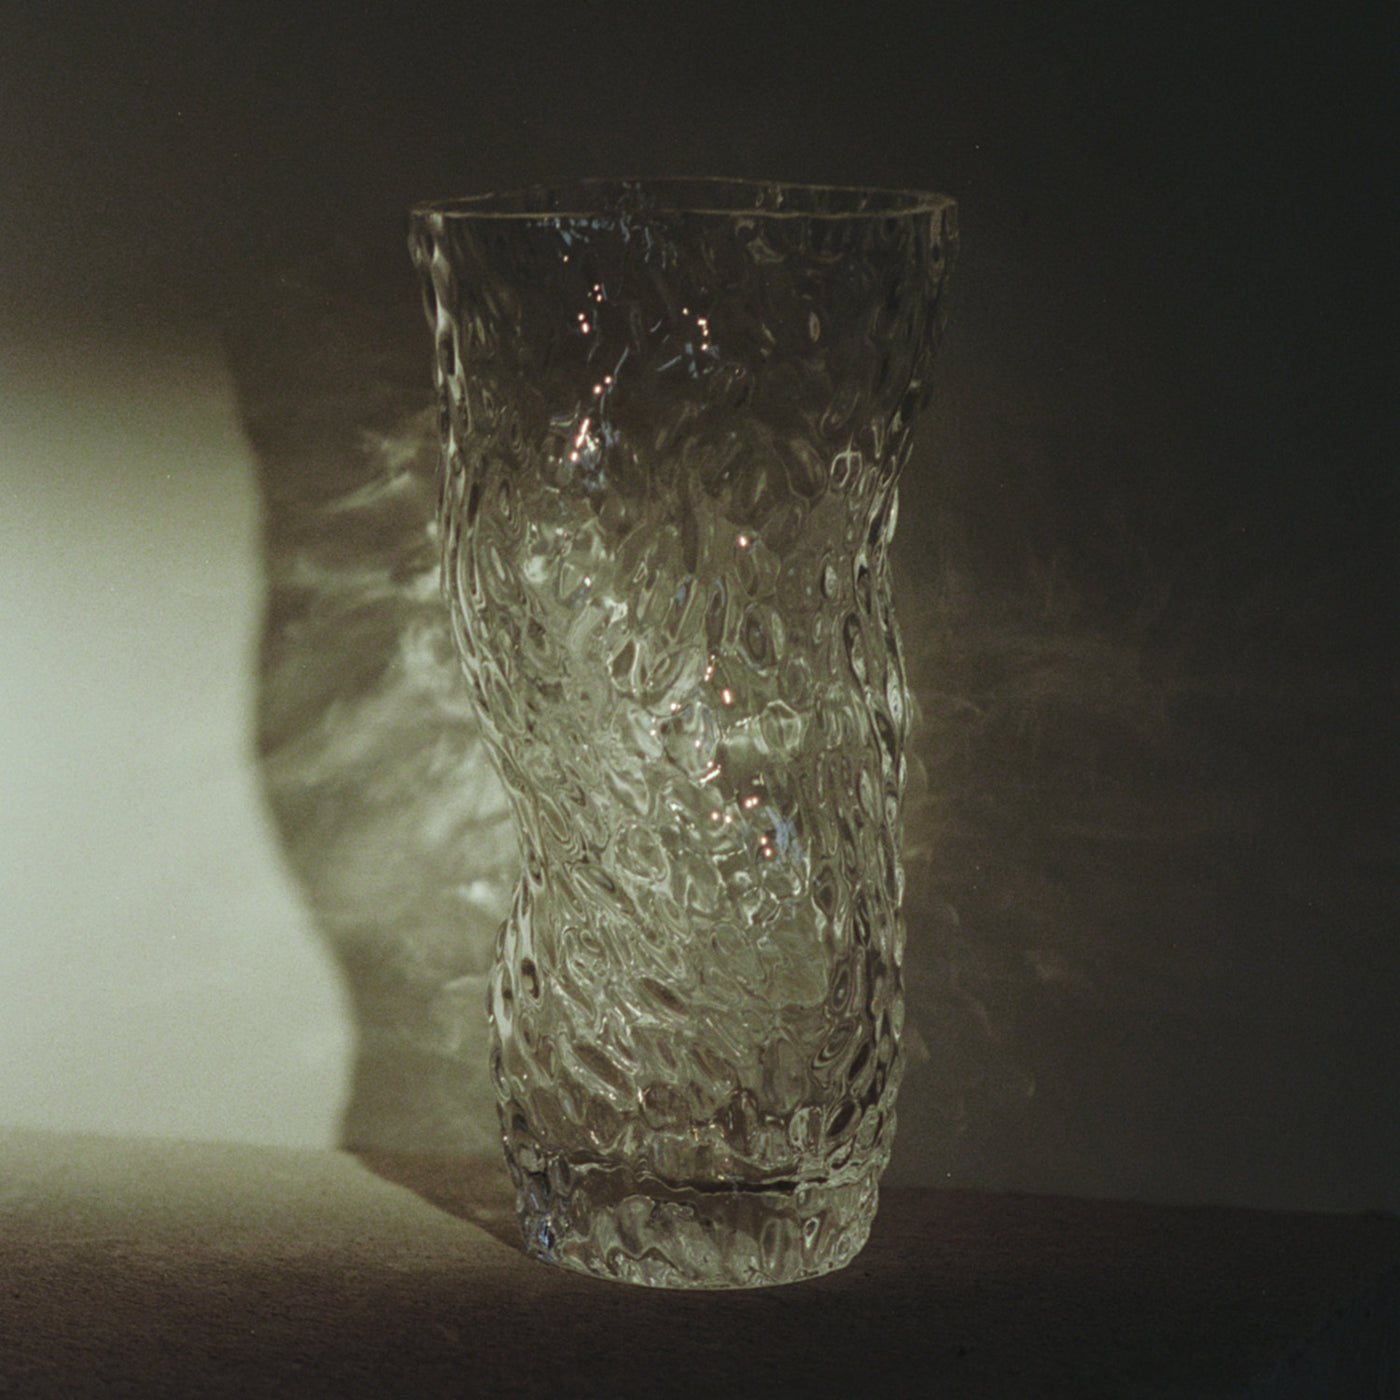 OSTREA vase